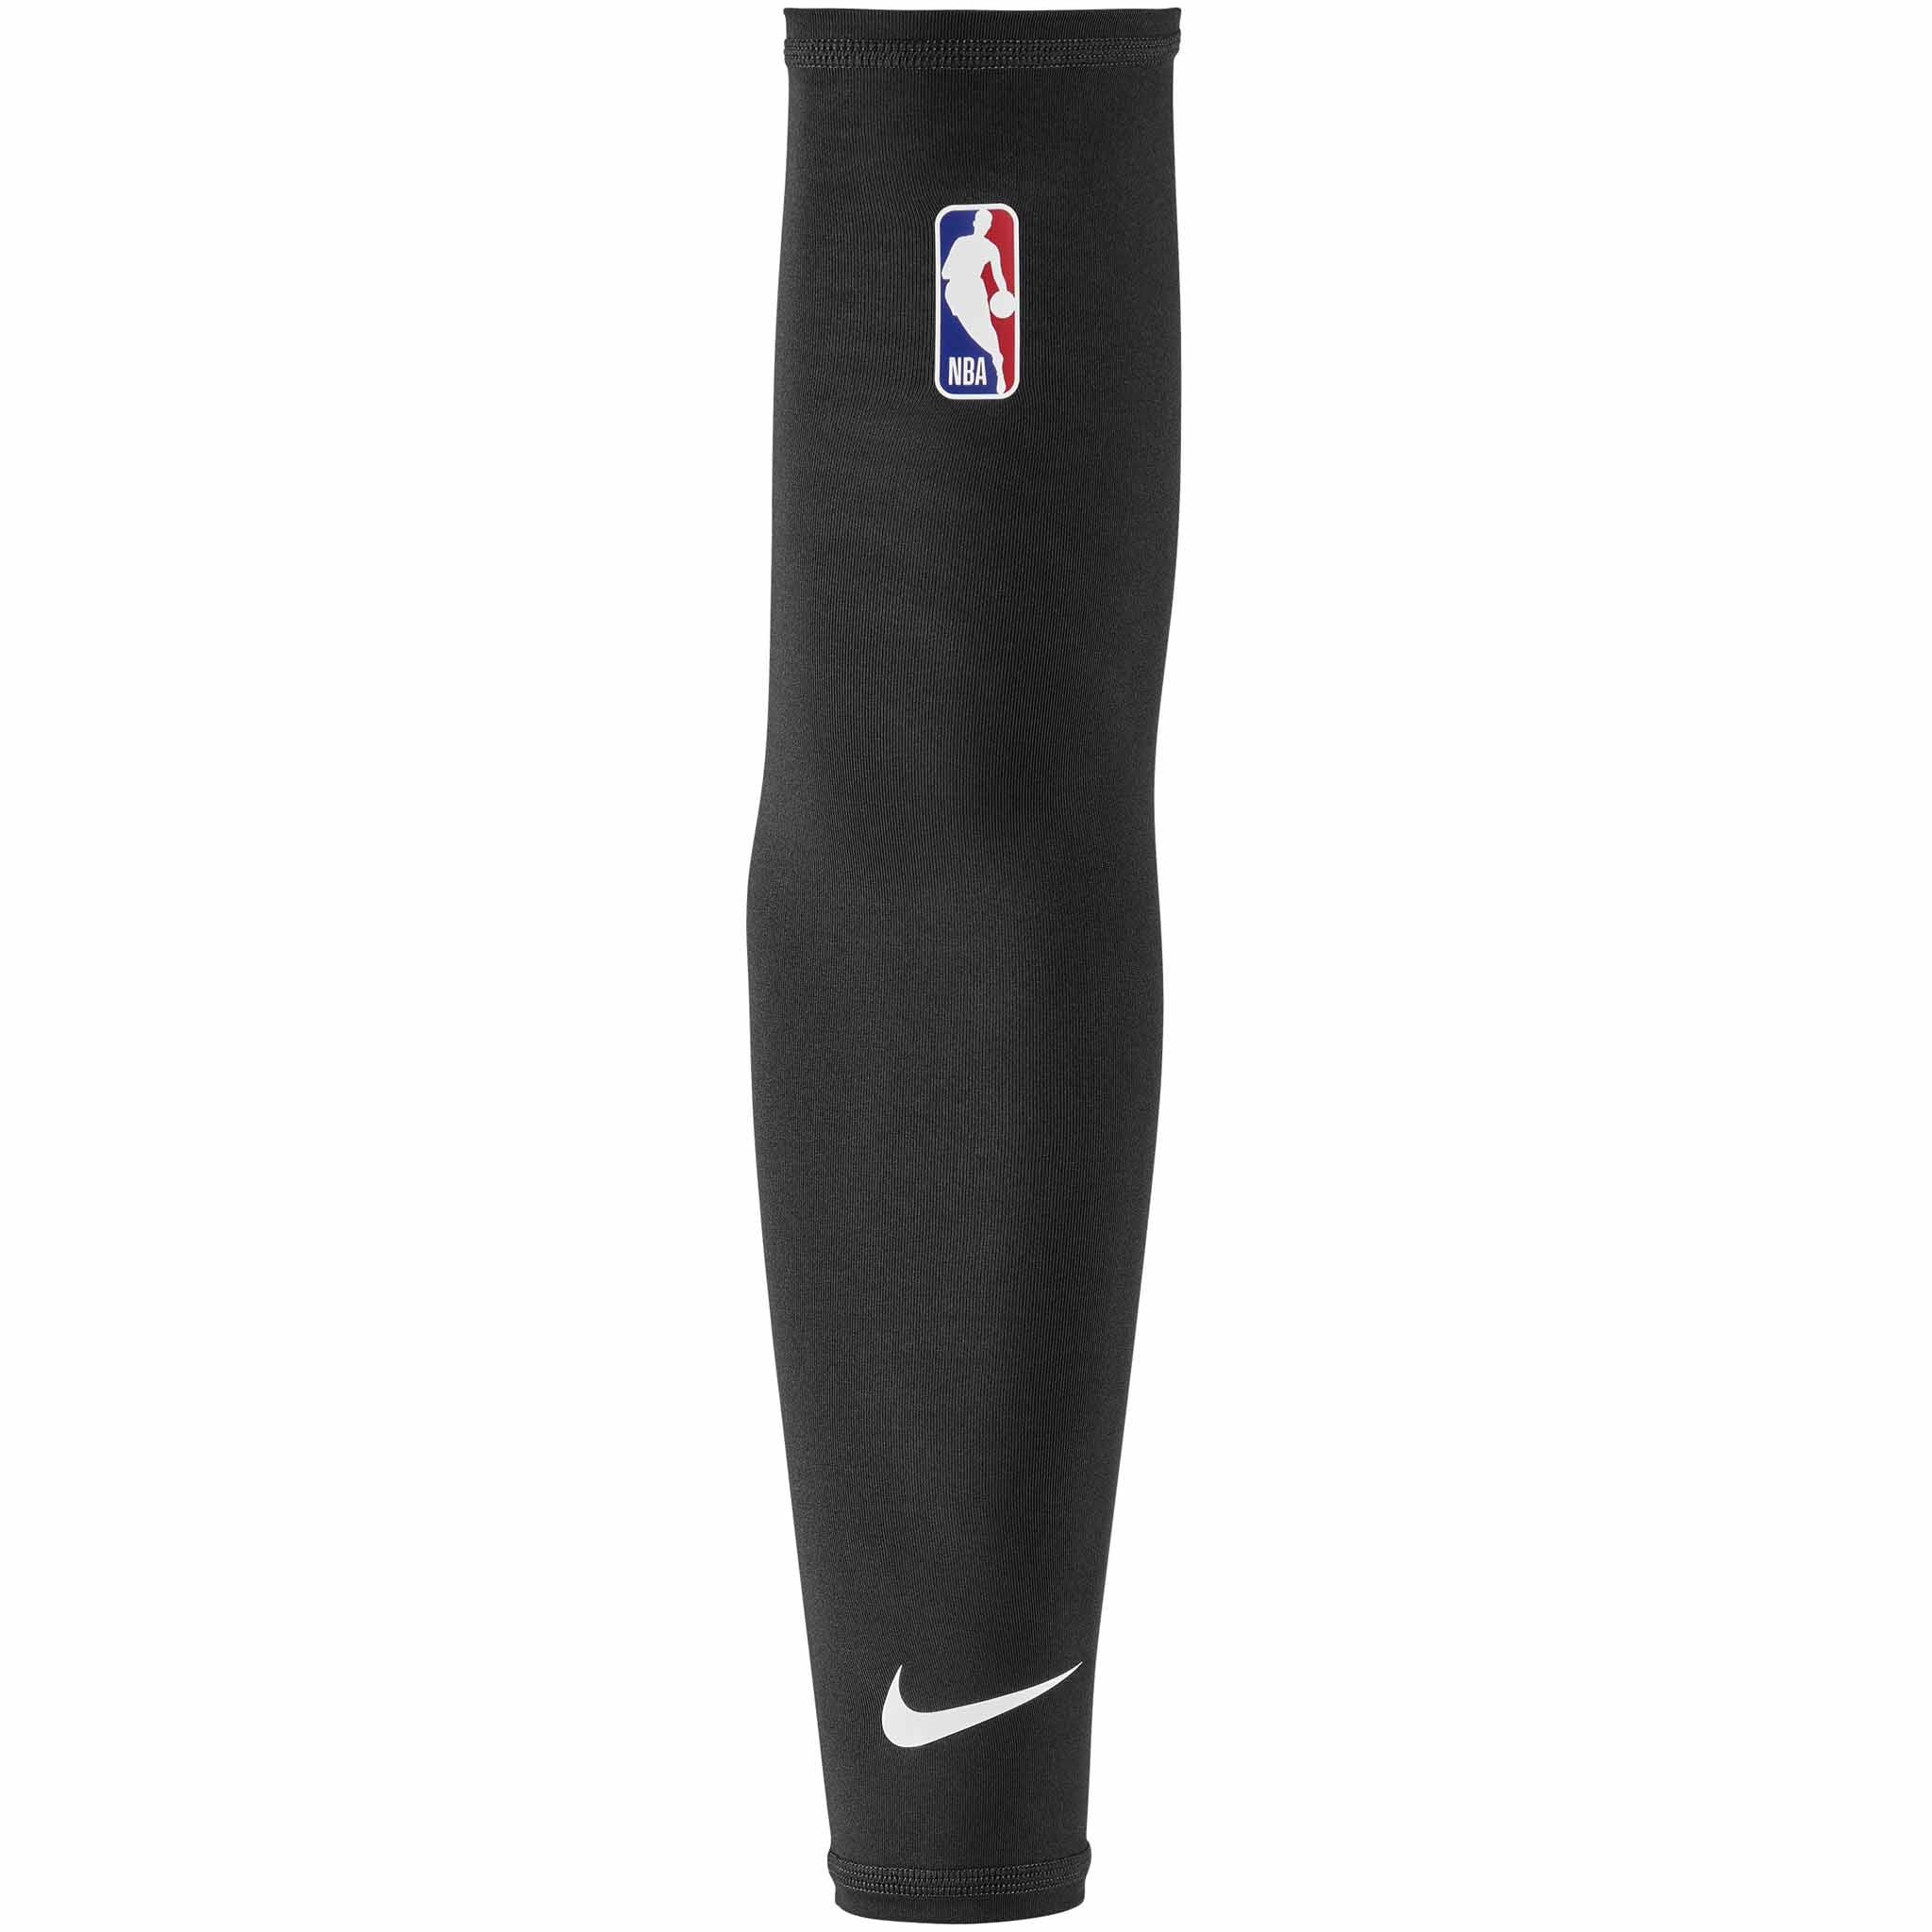 Nike Elite Arm Basketball Sleeve NBA Golden State Warriors Steph